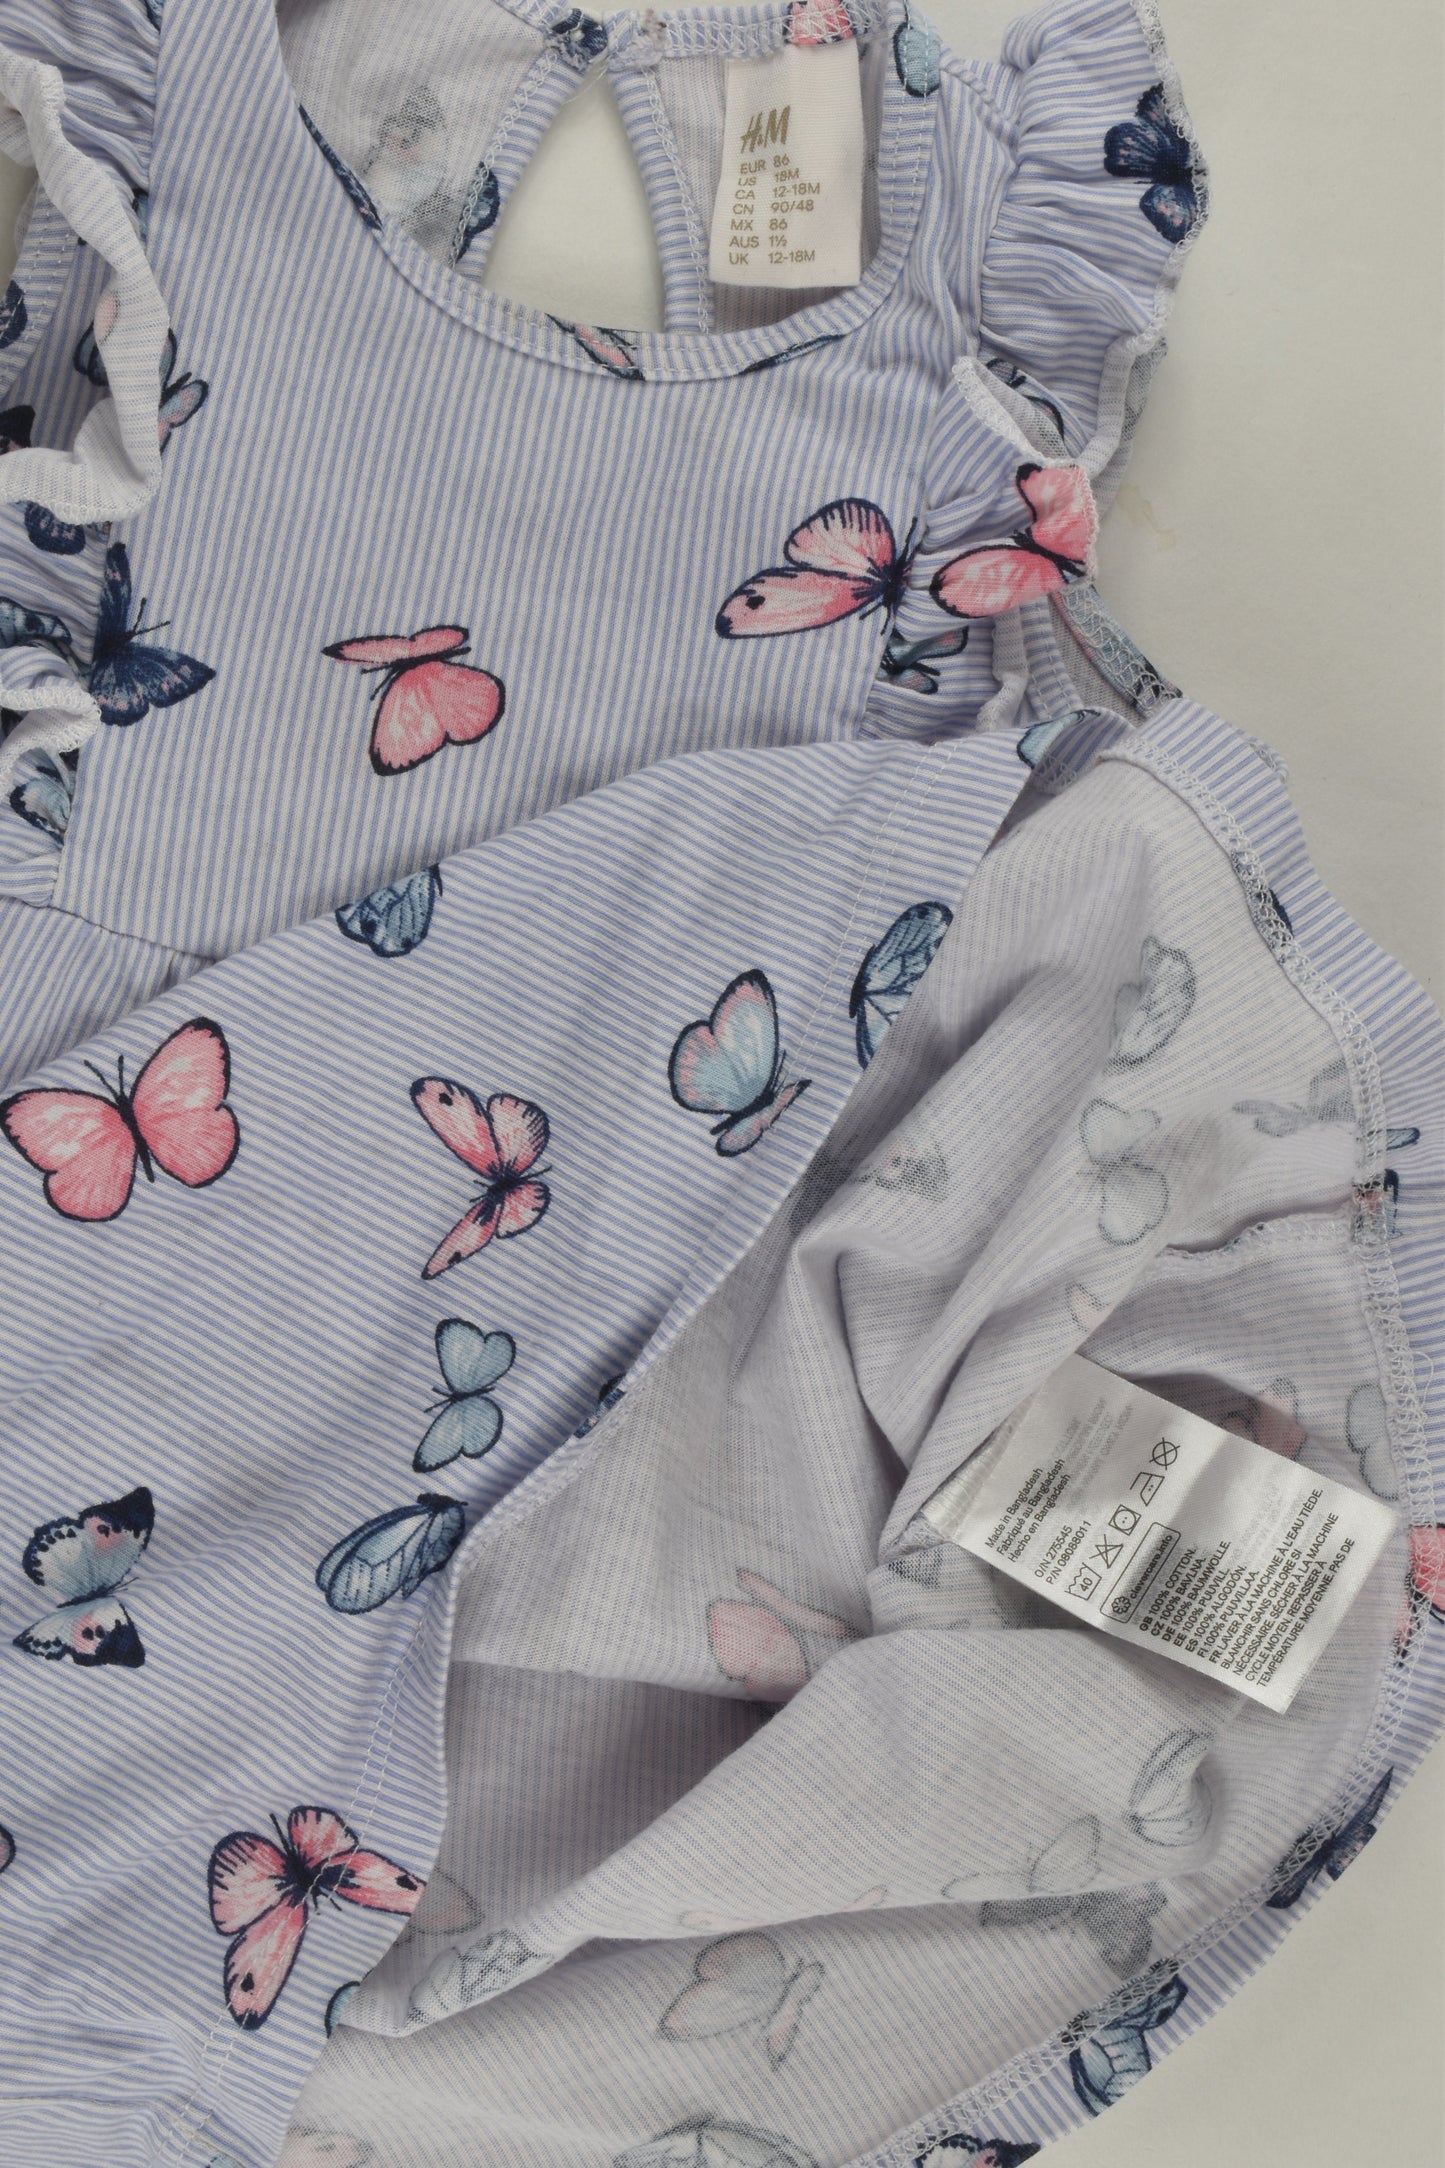 H&M Size 1 (86 cm) Butterfly Dress